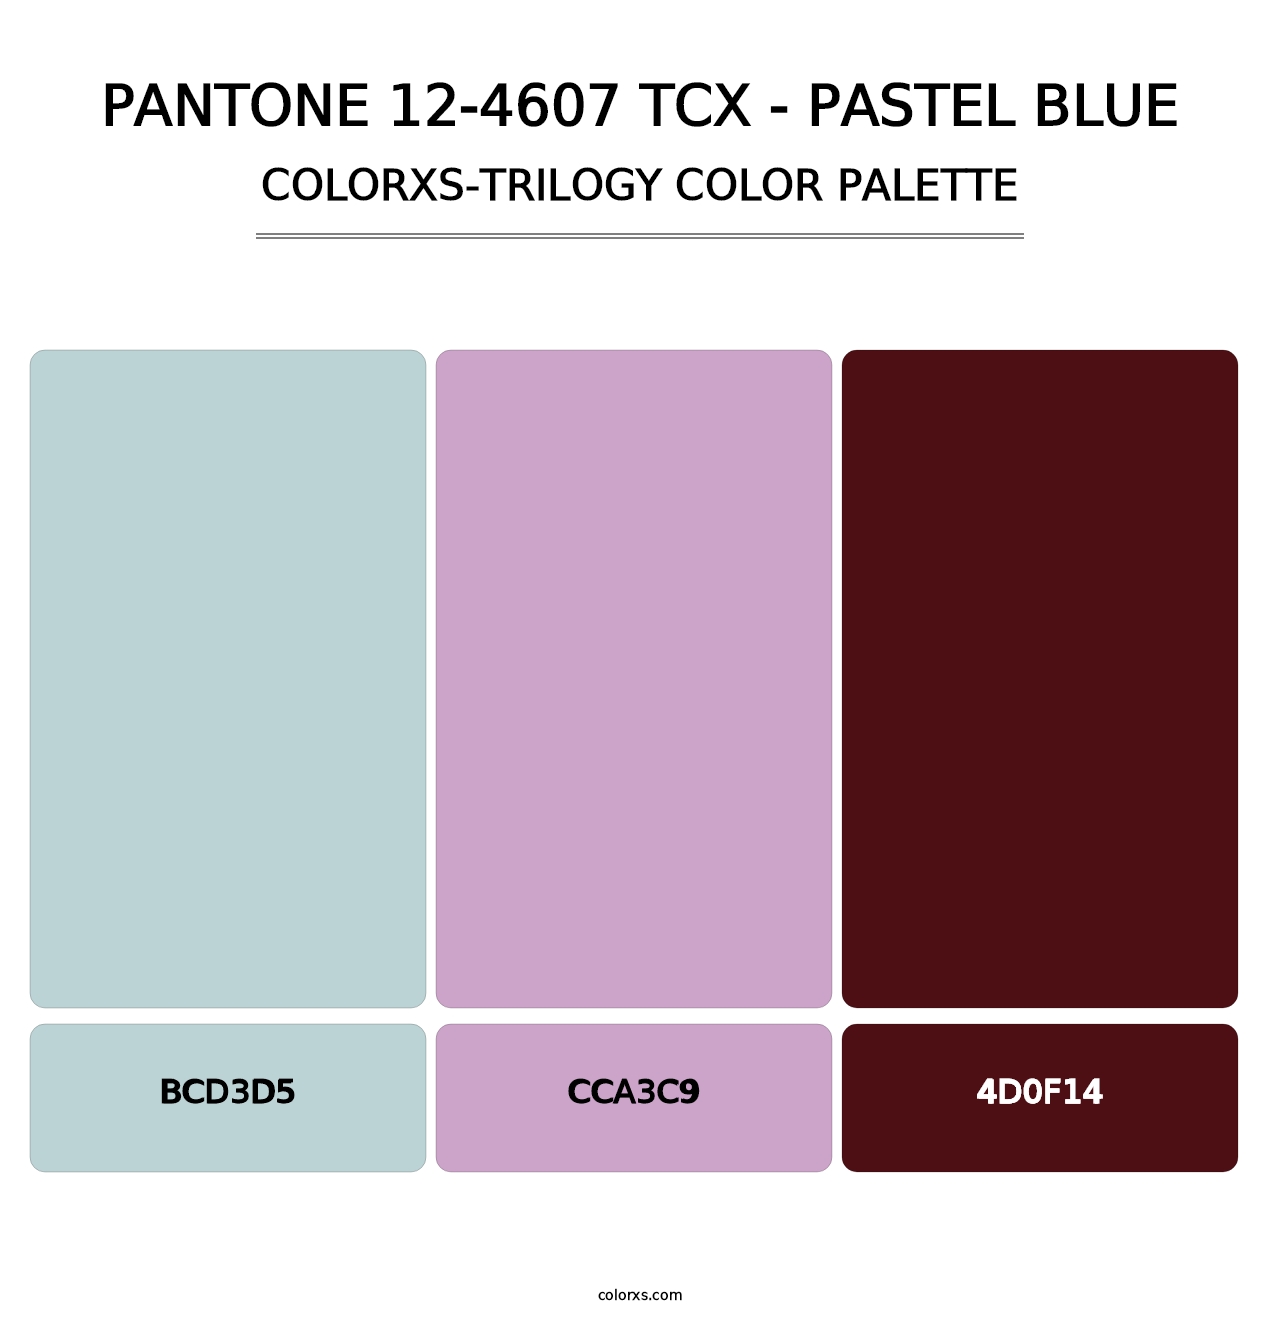 PANTONE 12-4607 TCX - Pastel Blue - Colorxs Trilogy Palette